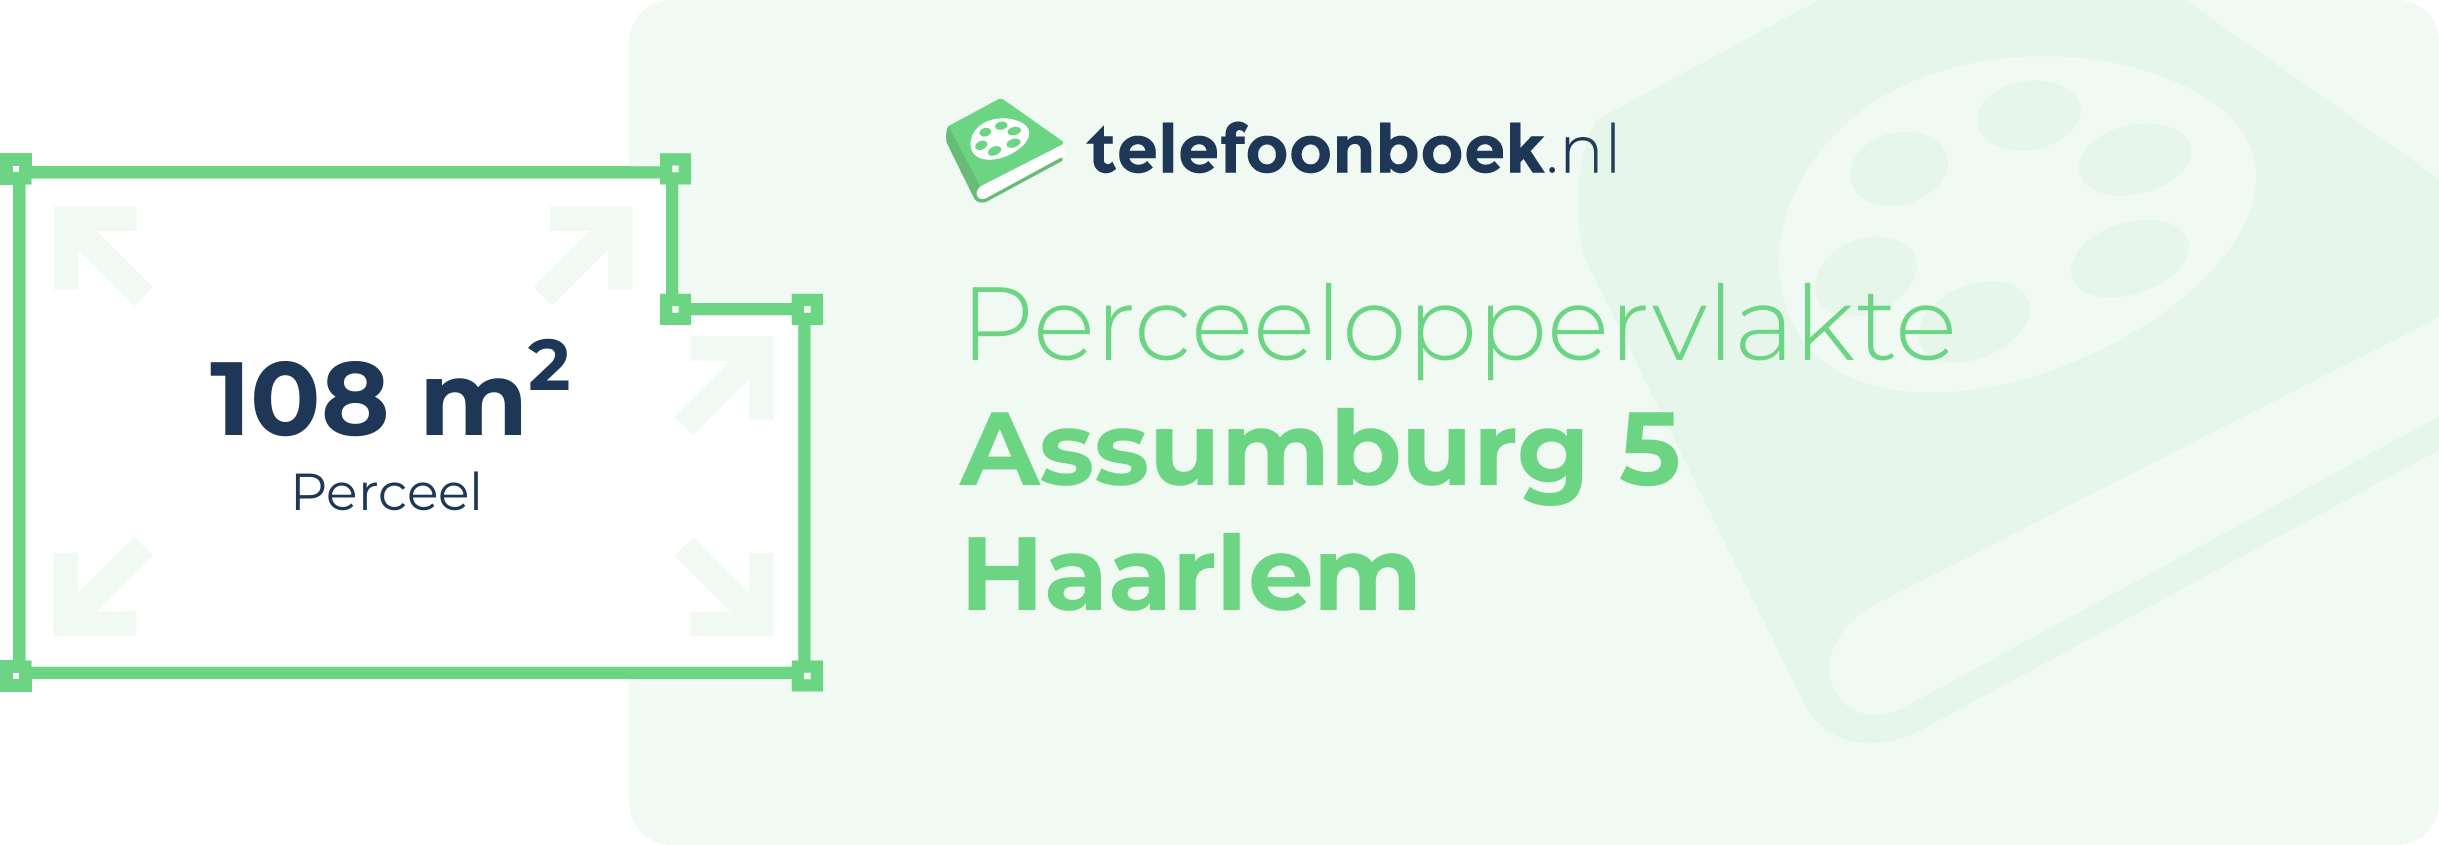 Perceeloppervlakte Assumburg 5 Haarlem